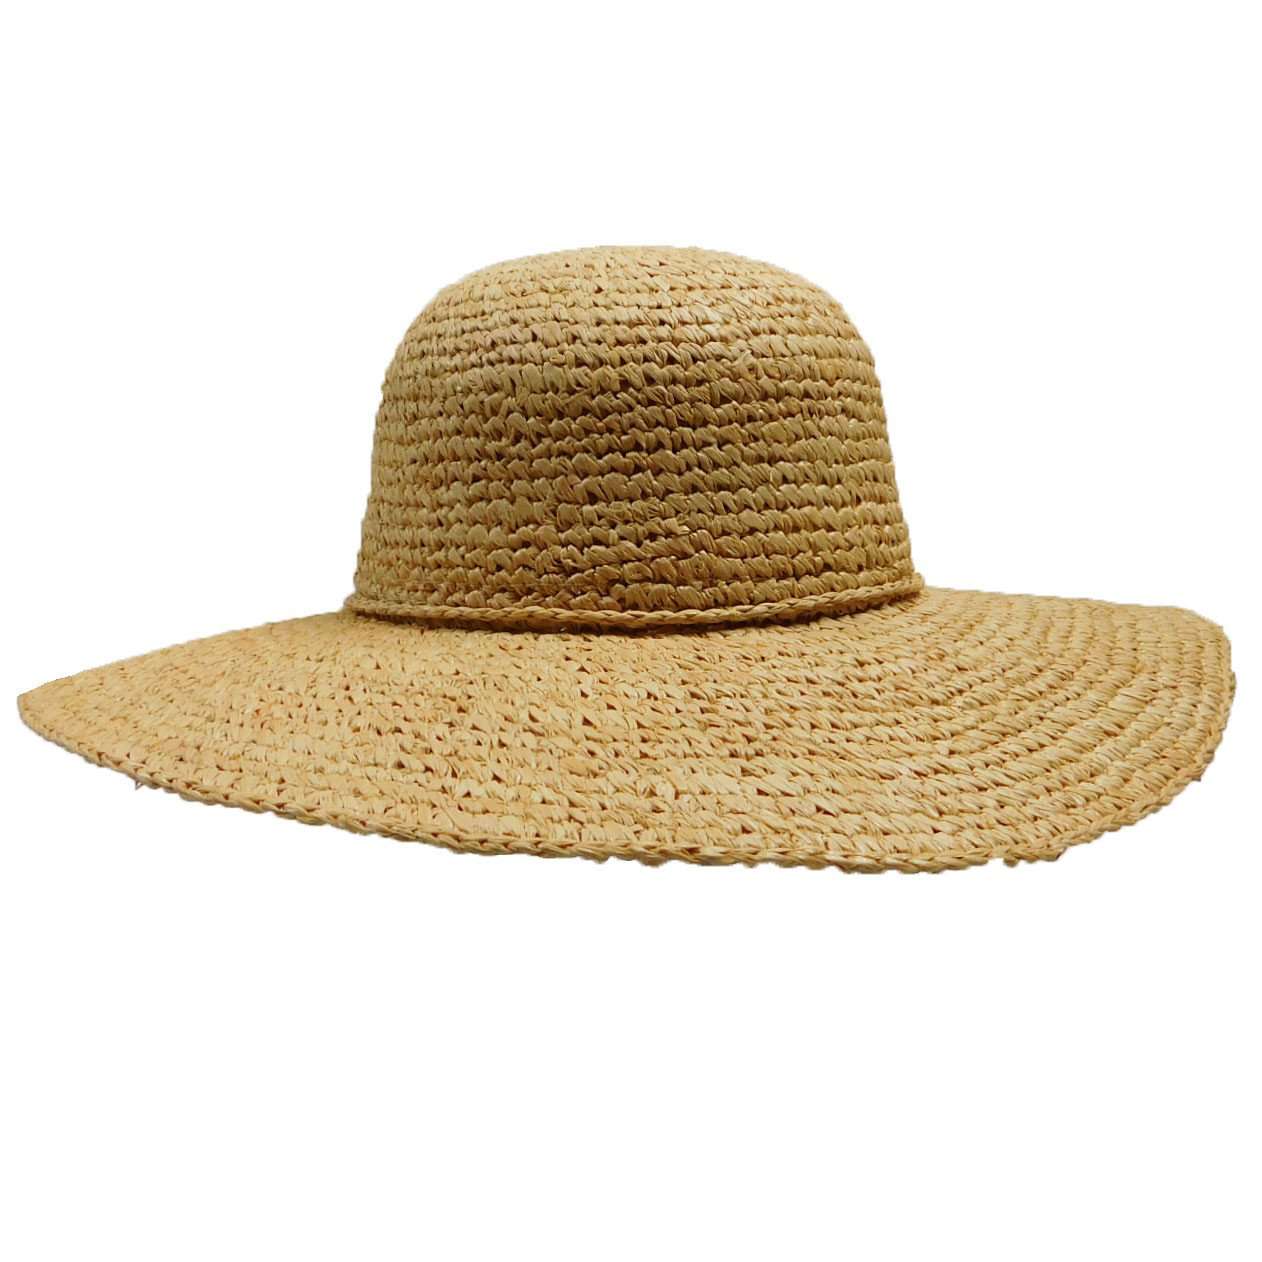 Paris Crochet Raffia Summer Hat by Peter Grimm - Brown, Floppy Hat - SetarTrading Hats 